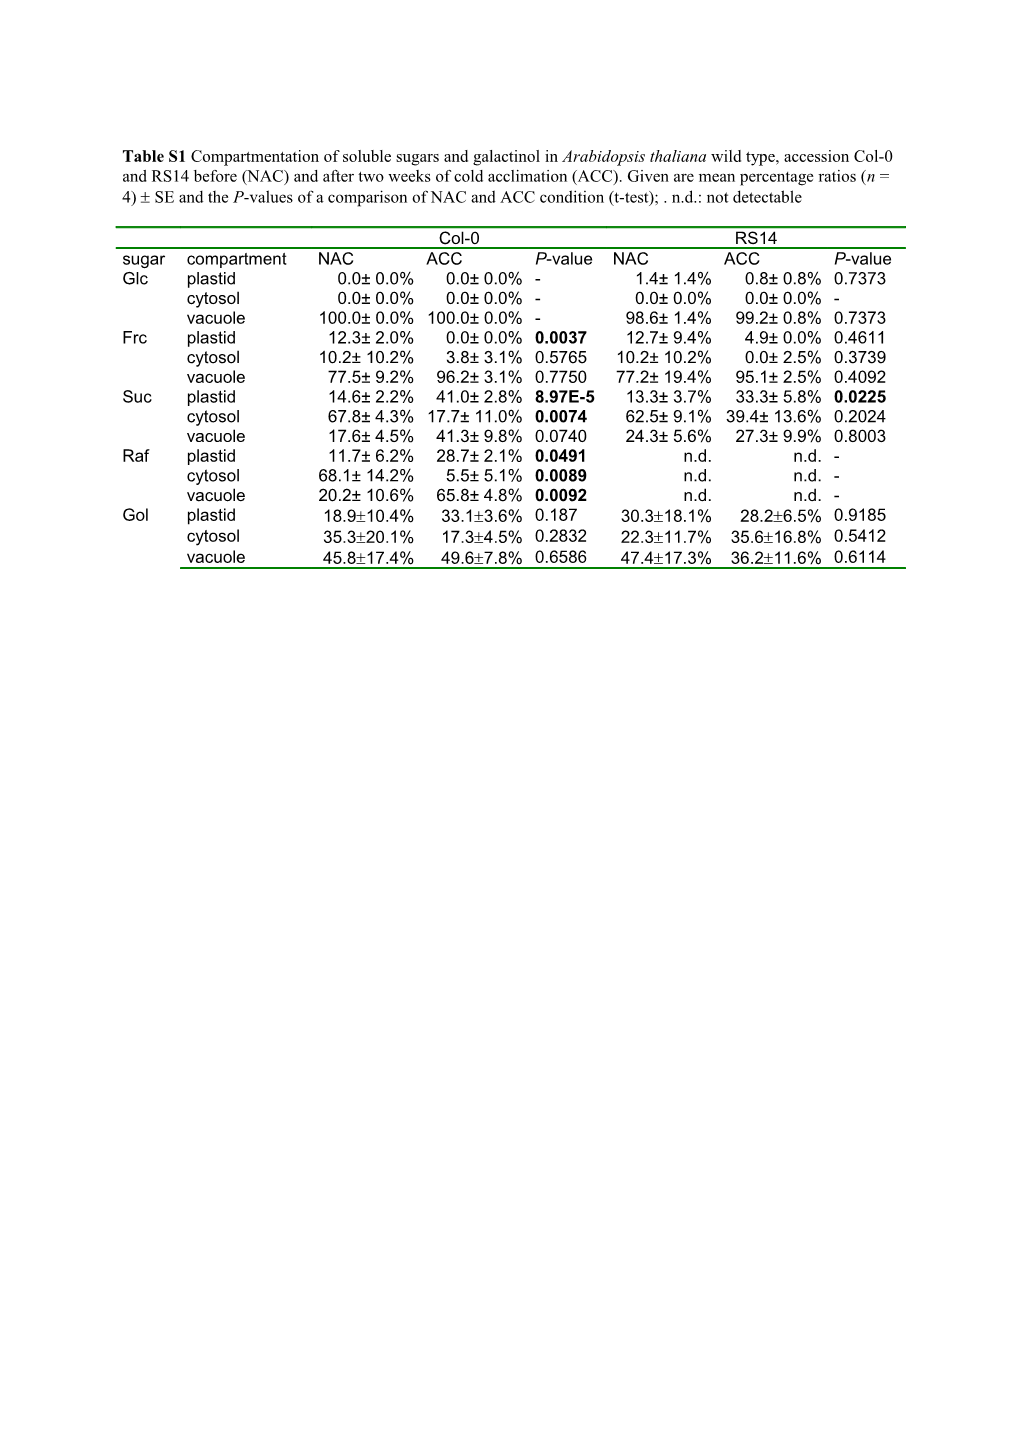 Table 1 Compartmentation of Soluble Sugars and Galactinol in Arabidopsis Thaliana Wild